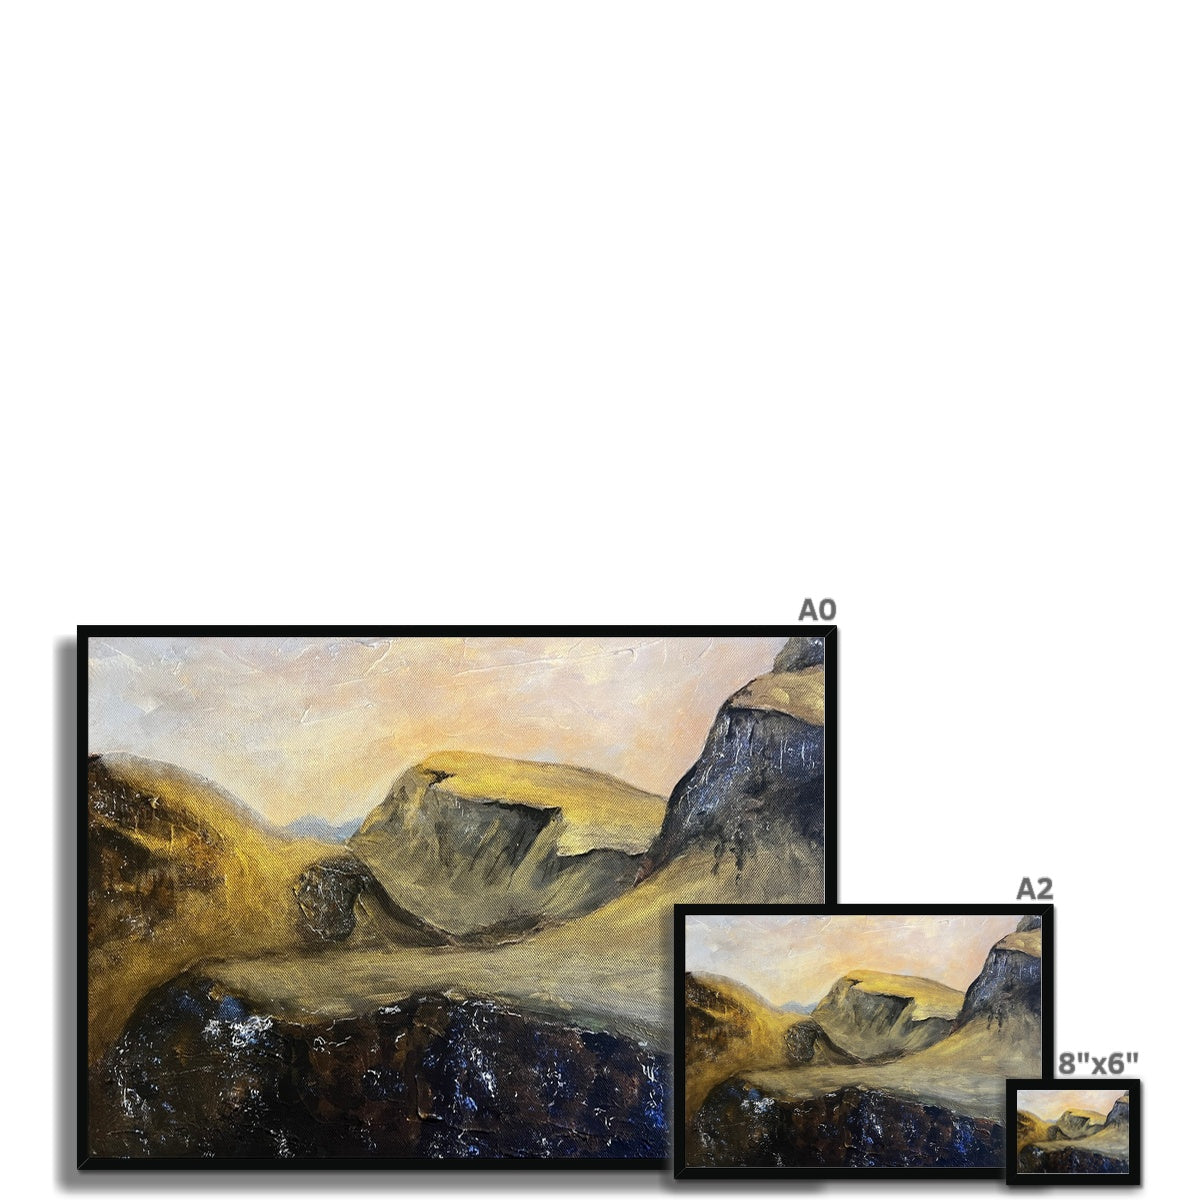 The Quiraing Skye Painting | Framed Prints From Scotland-Framed Prints-Skye Art Gallery-Paintings, Prints, Homeware, Art Gifts From Scotland By Scottish Artist Kevin Hunter